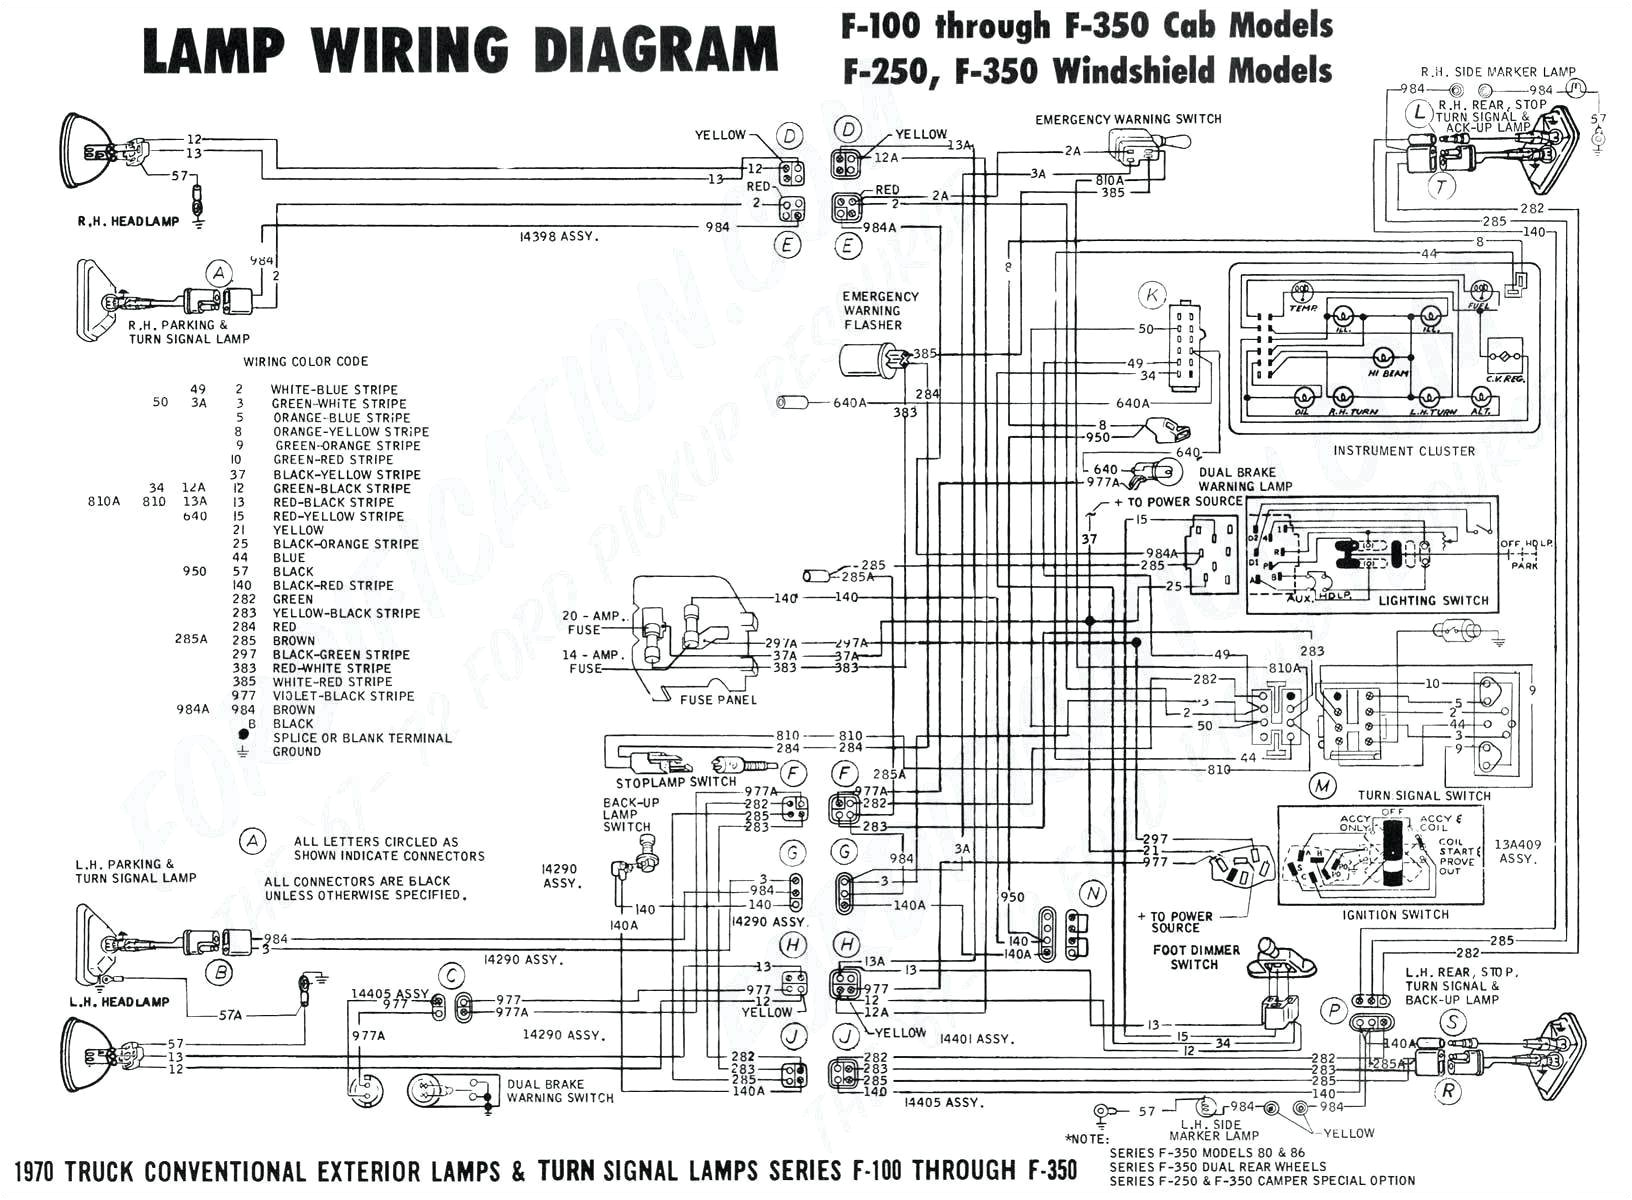 wiring diagram also harley speaker switch wiring likewise motorcycle jeep wrangler floor drain plugs moreover 1992 harley sportster wiring